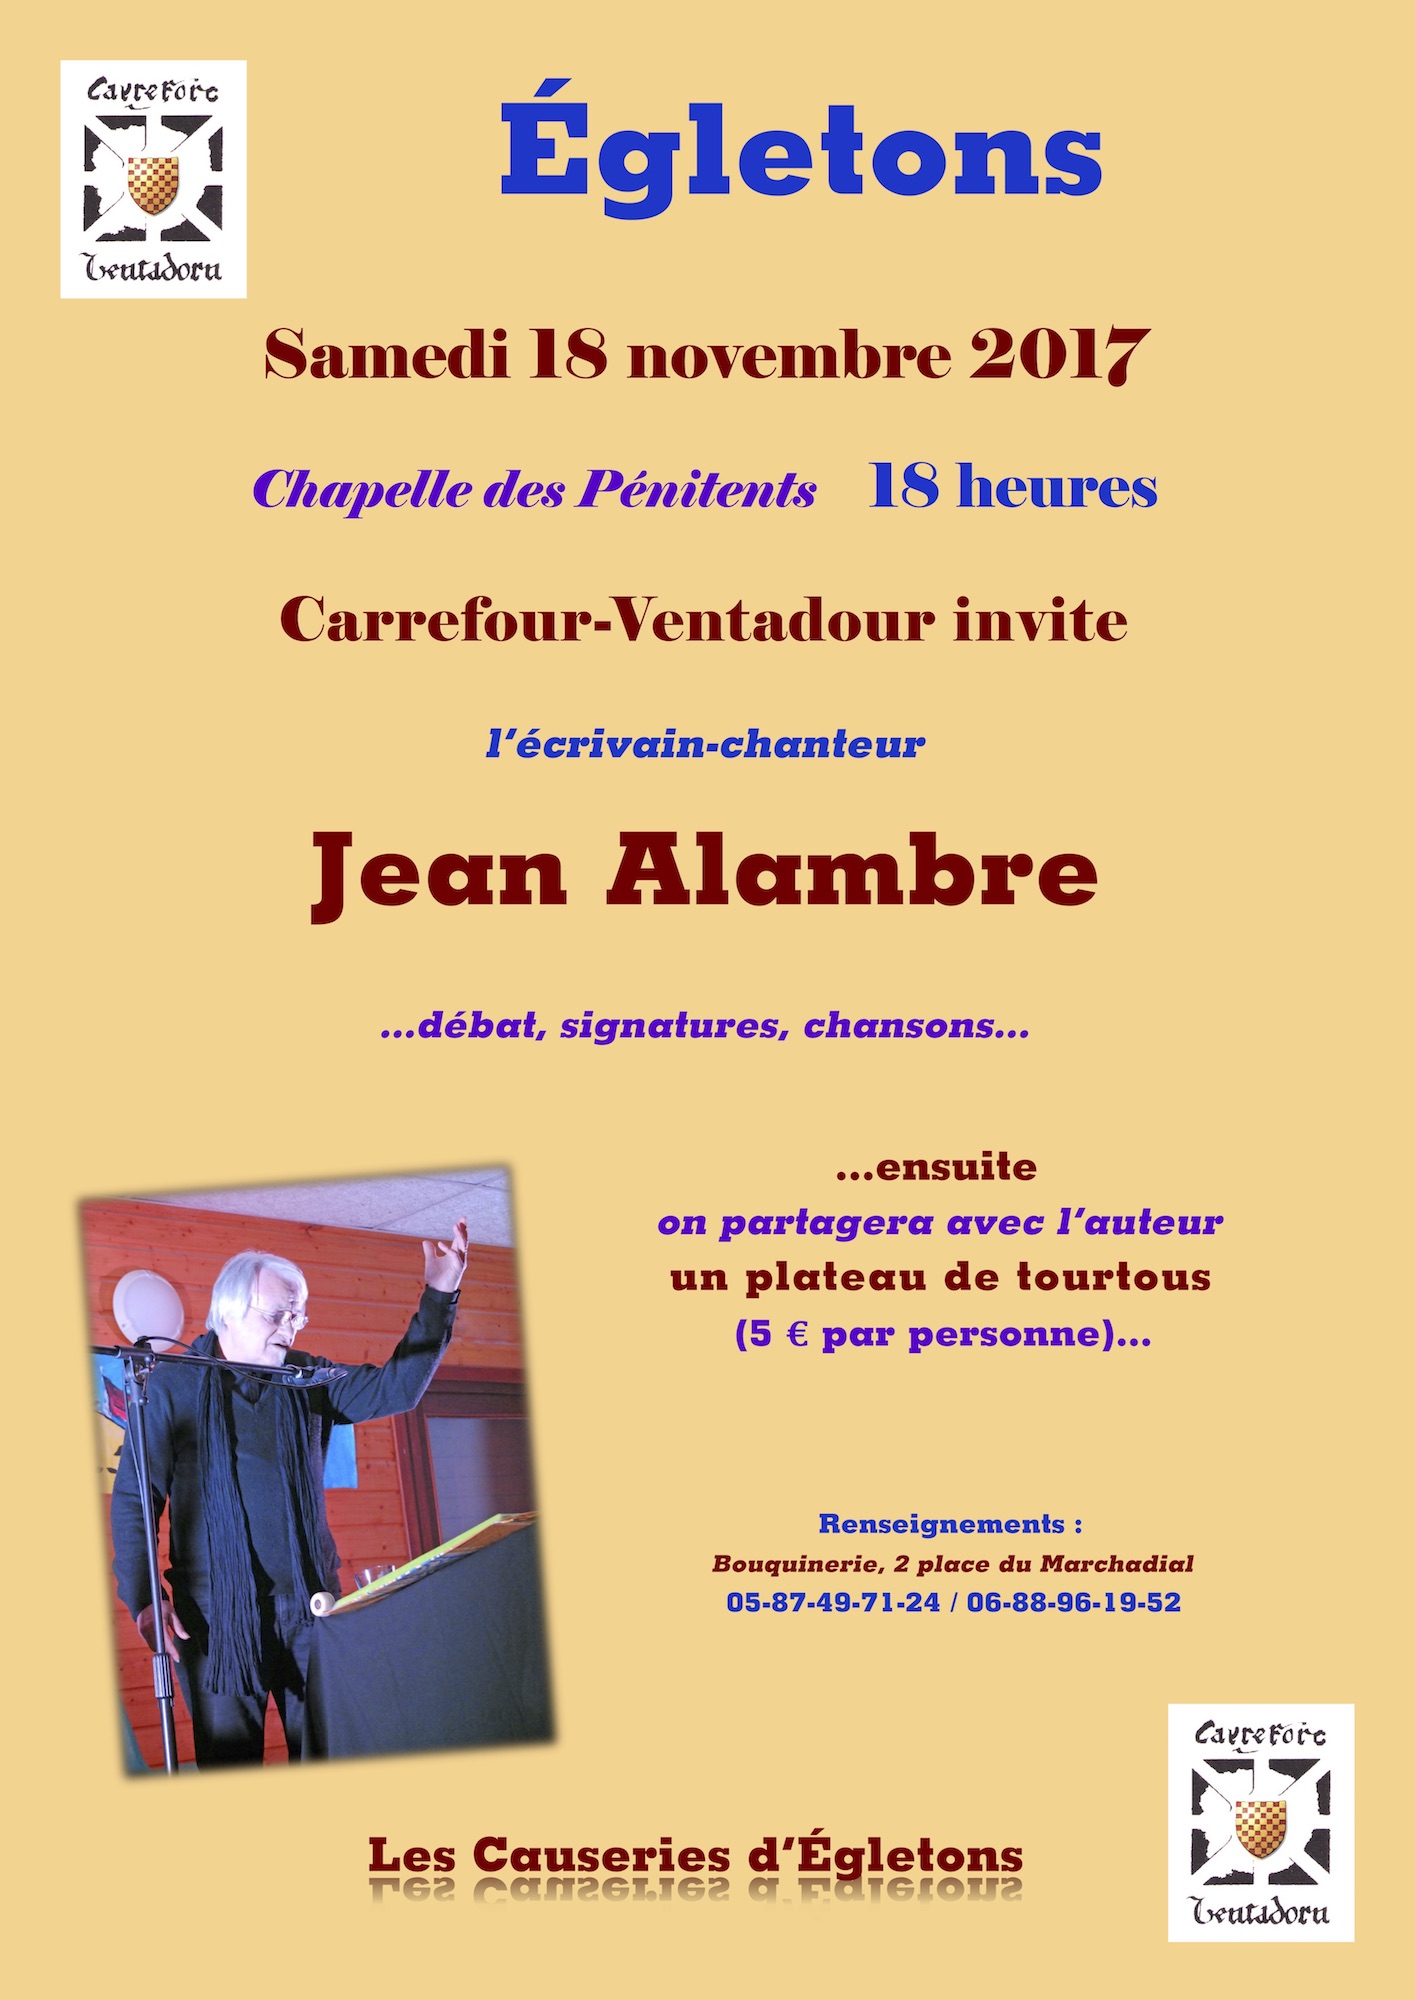 Les Causeries d’Egletons invitent Jean Alambre